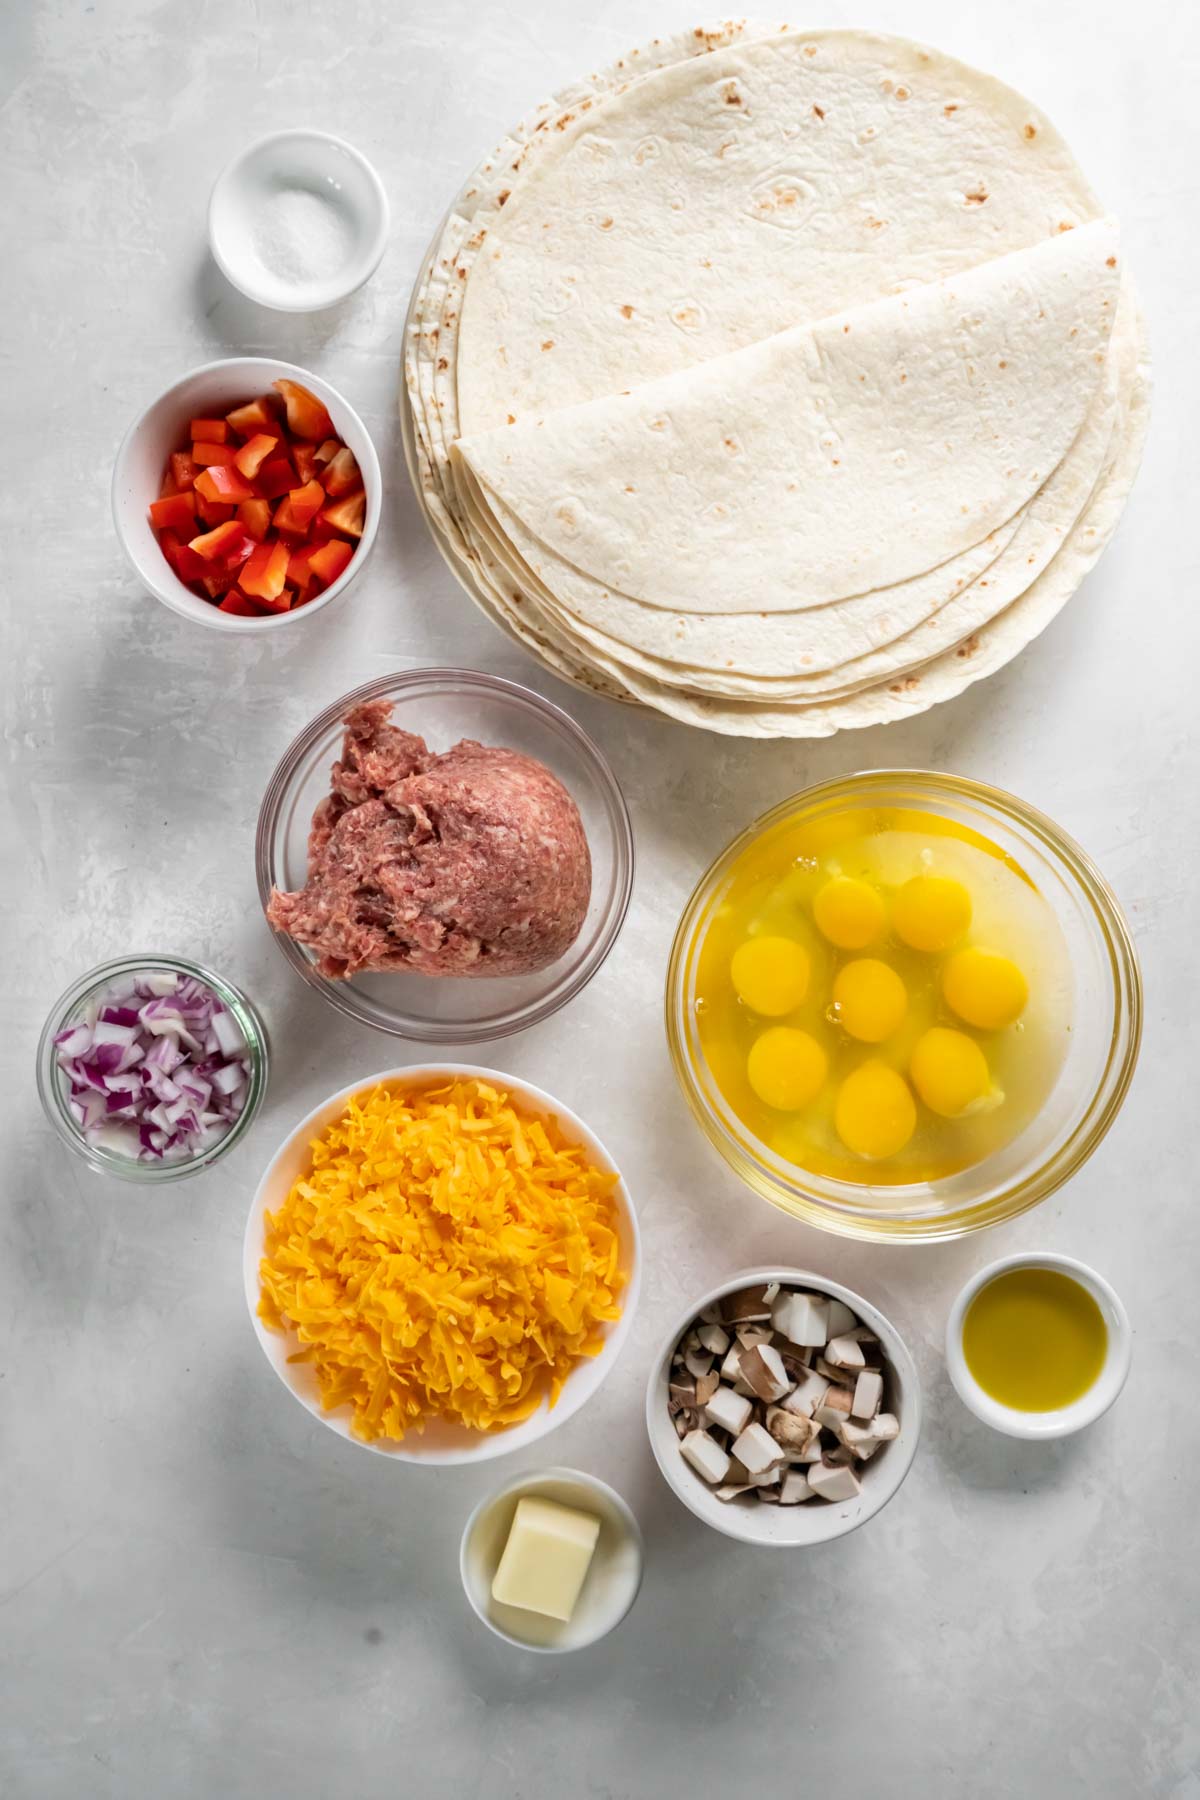 Ingredients for breakfast burrito recipe.